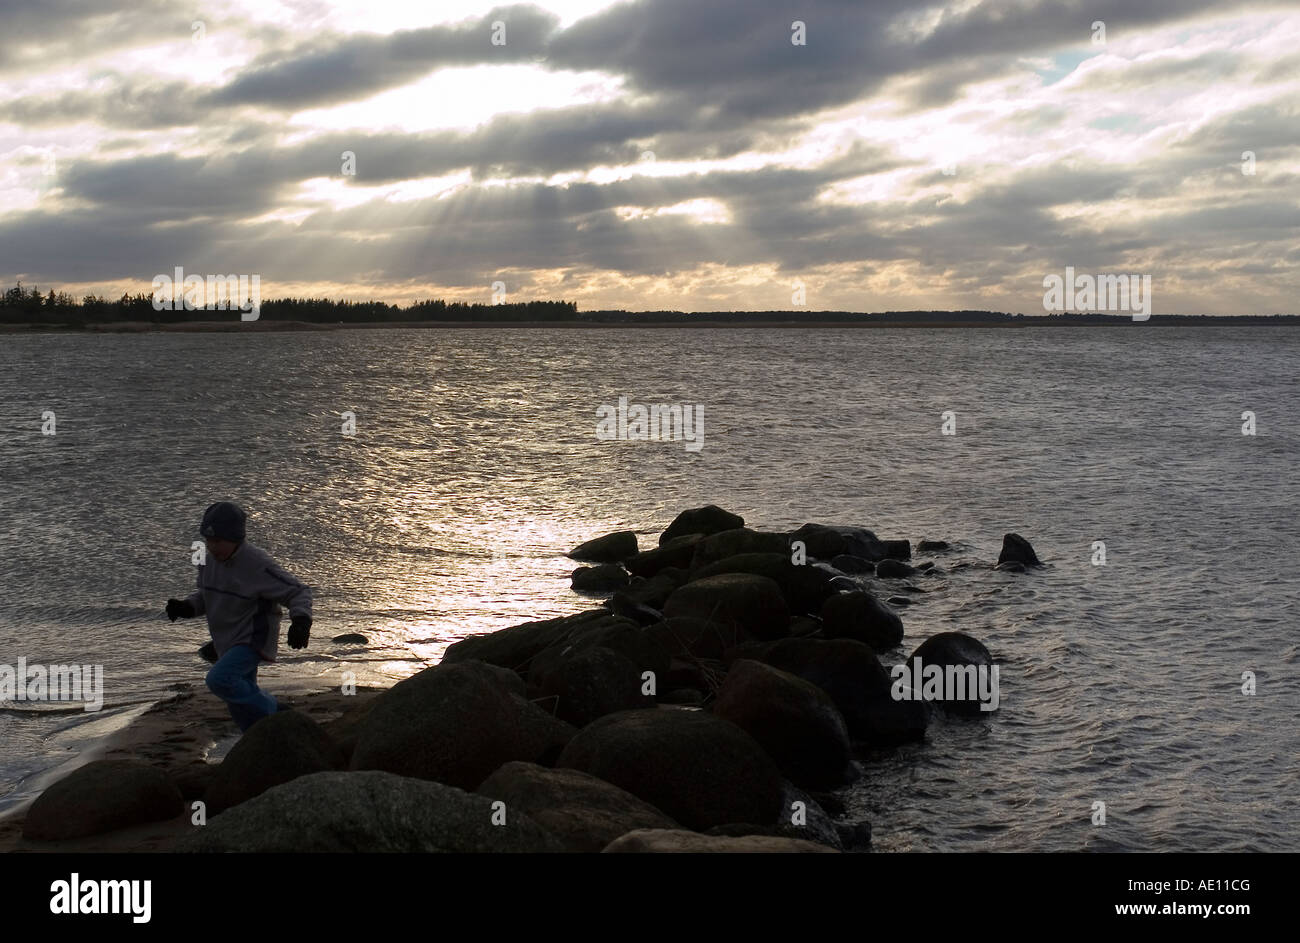 Coast of the North Sea and sun shining through dark clouds, Denmark Stock Photo